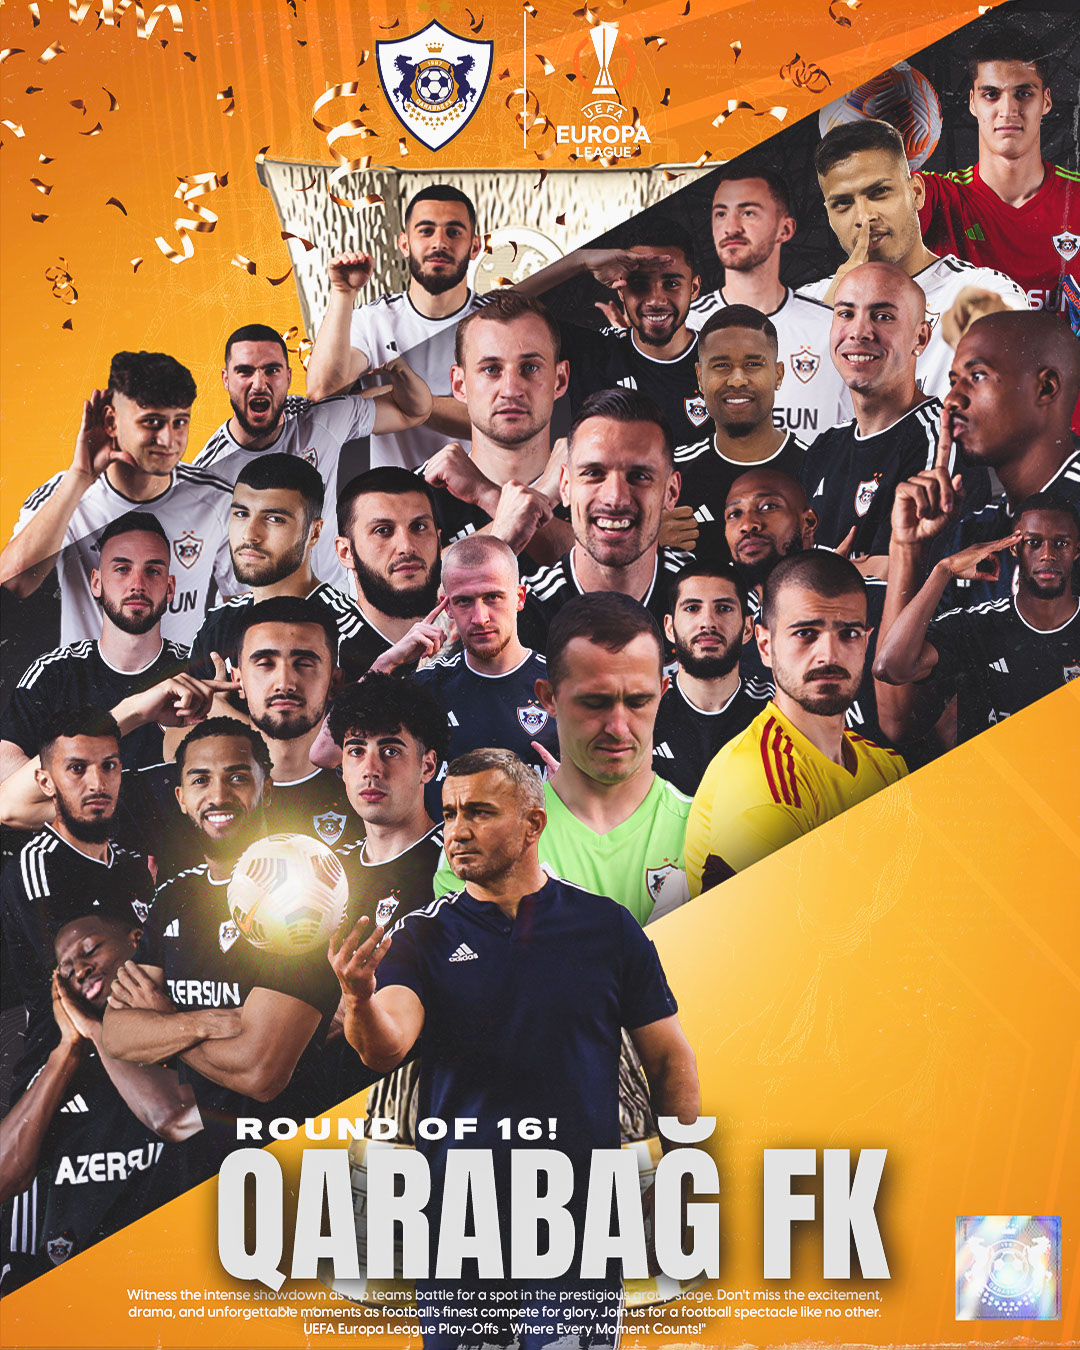 Qarabag FK Poster round of 16 rendition image